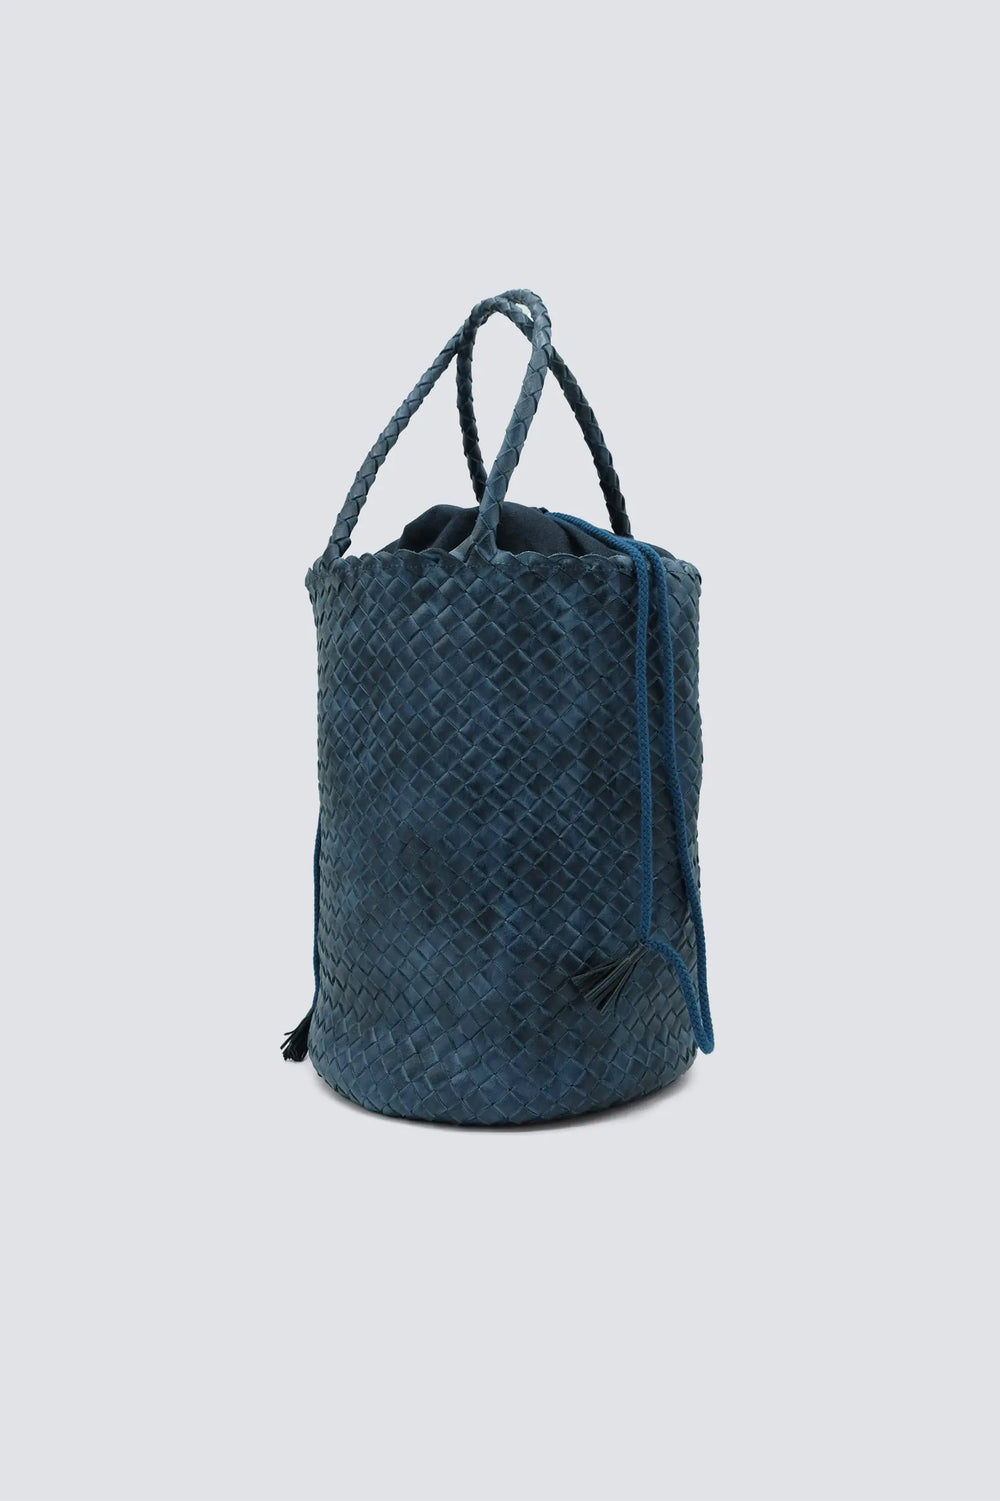 Dragon Diffusion - Woven Leather Bag Handmade - Jacky Bucket Marine Brush